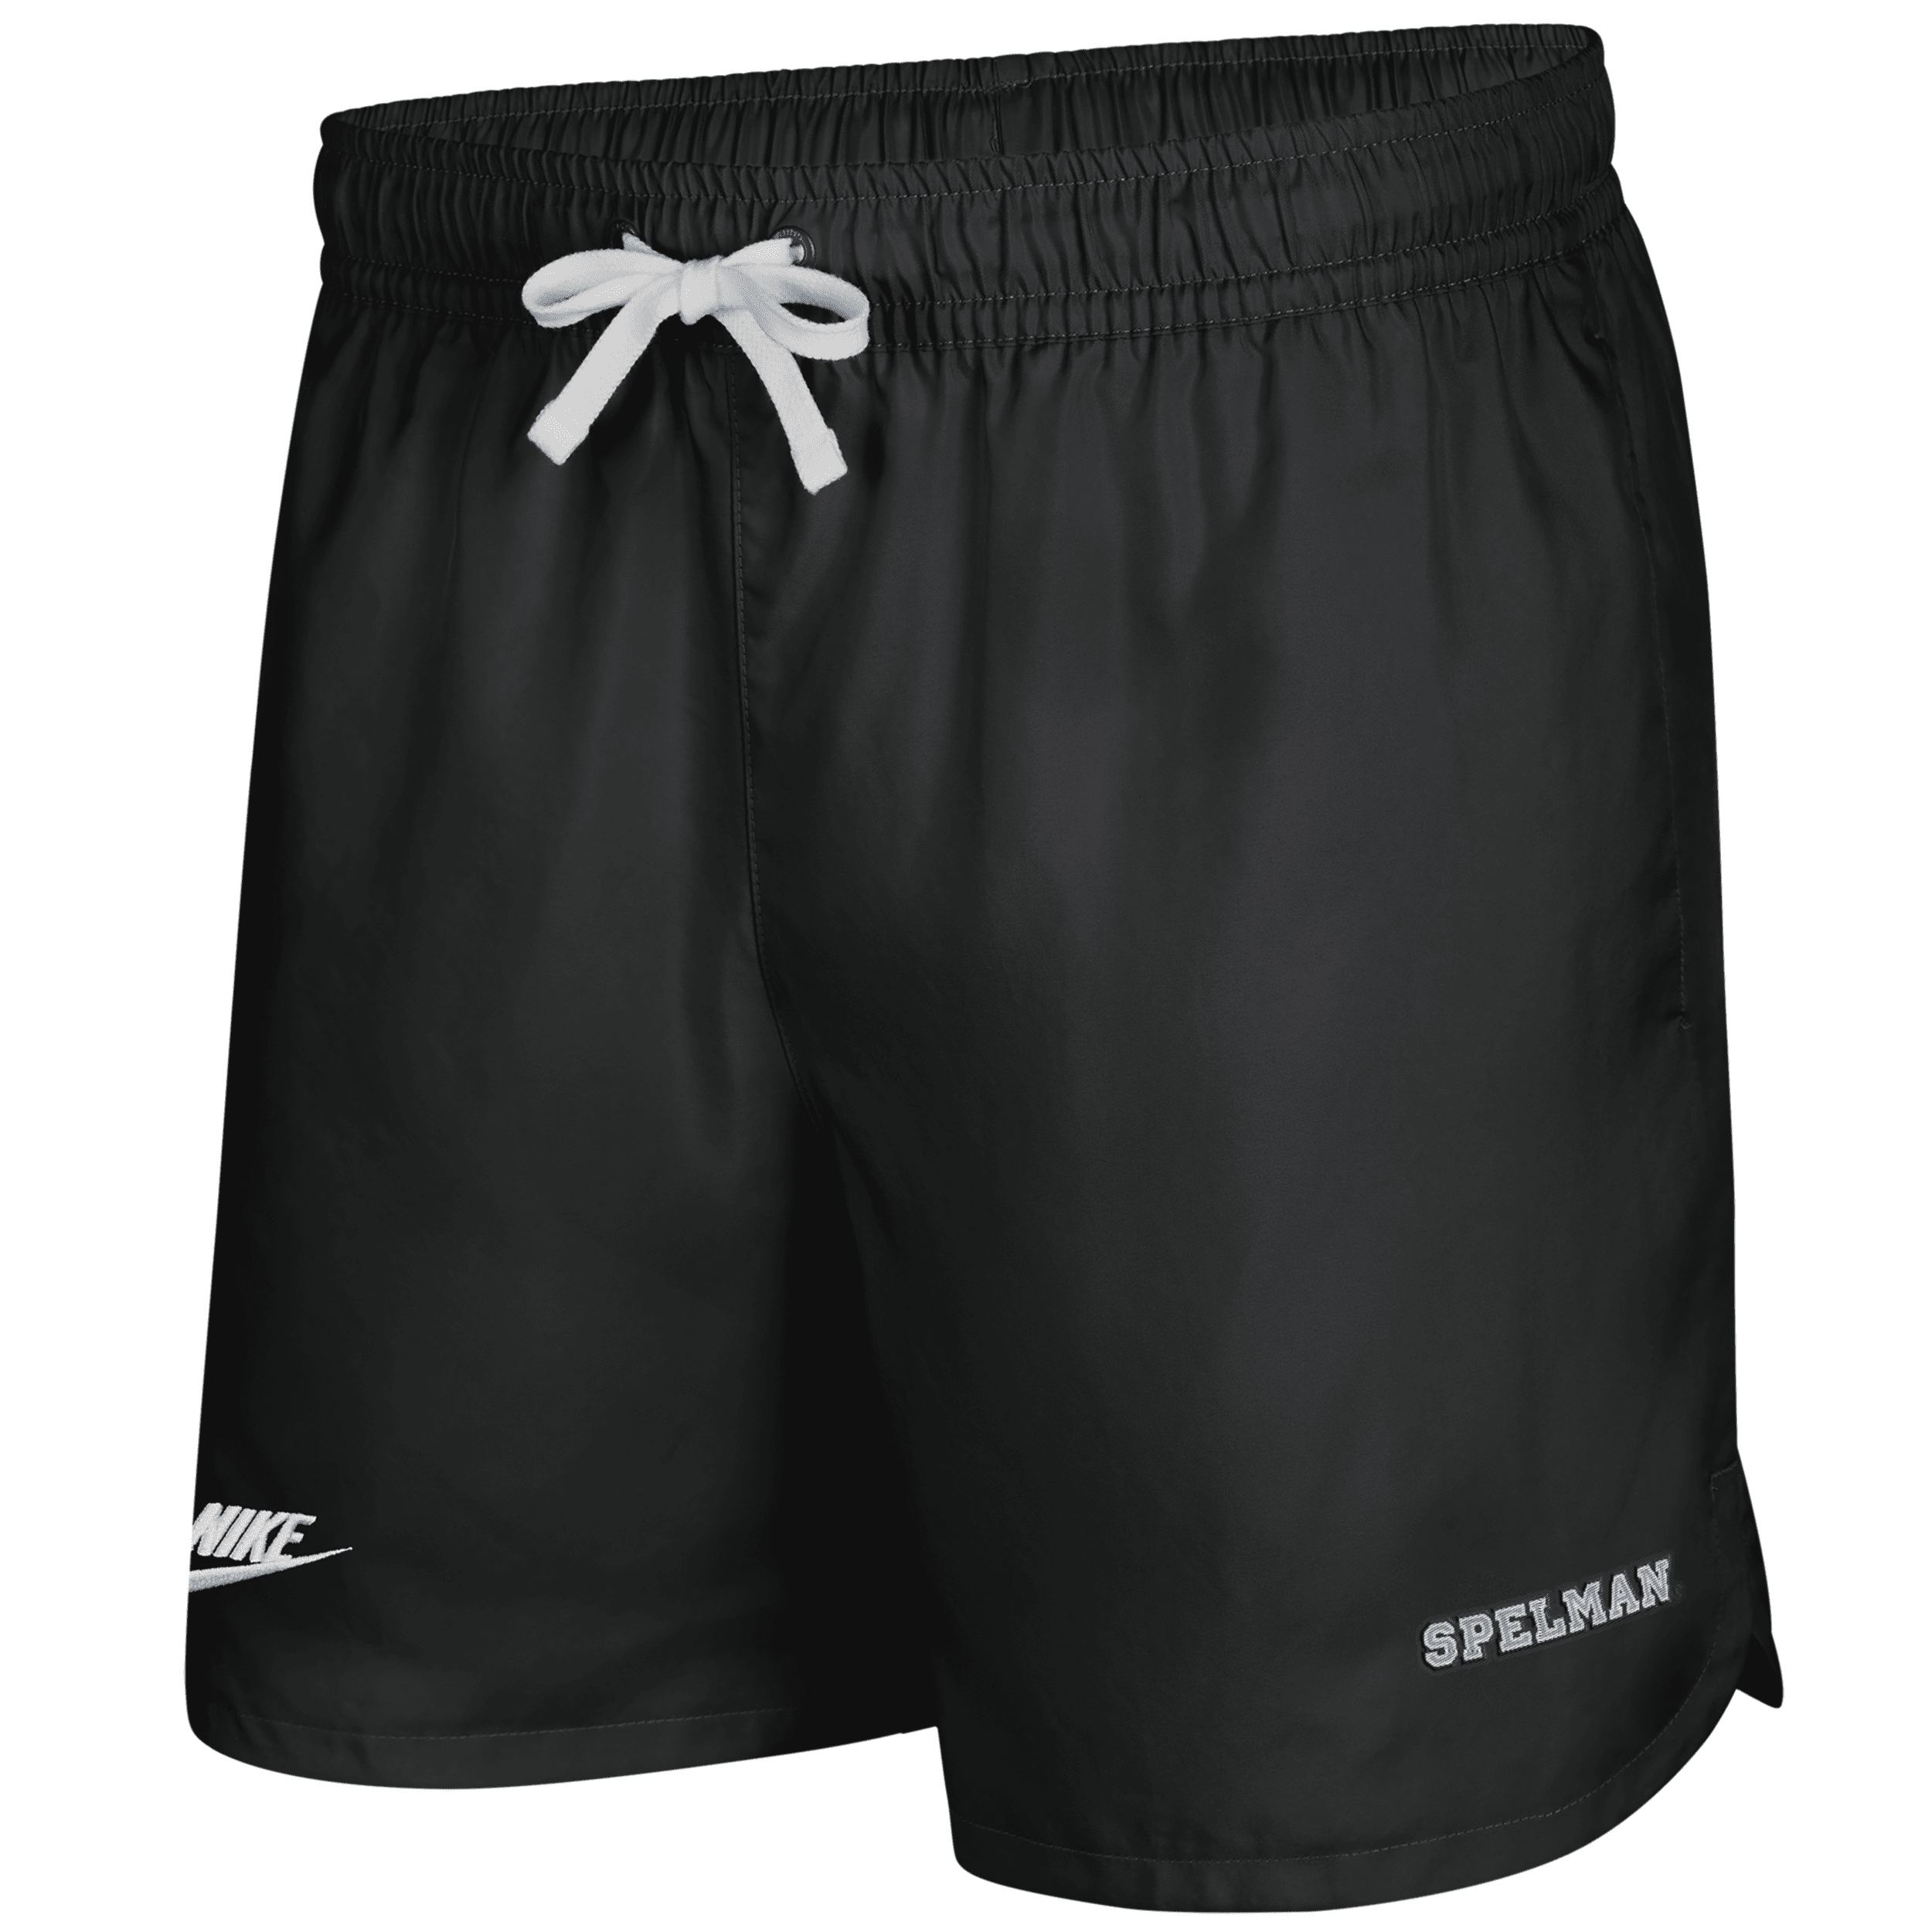 Nike Spelman  Men's College Flow Shorts In Black